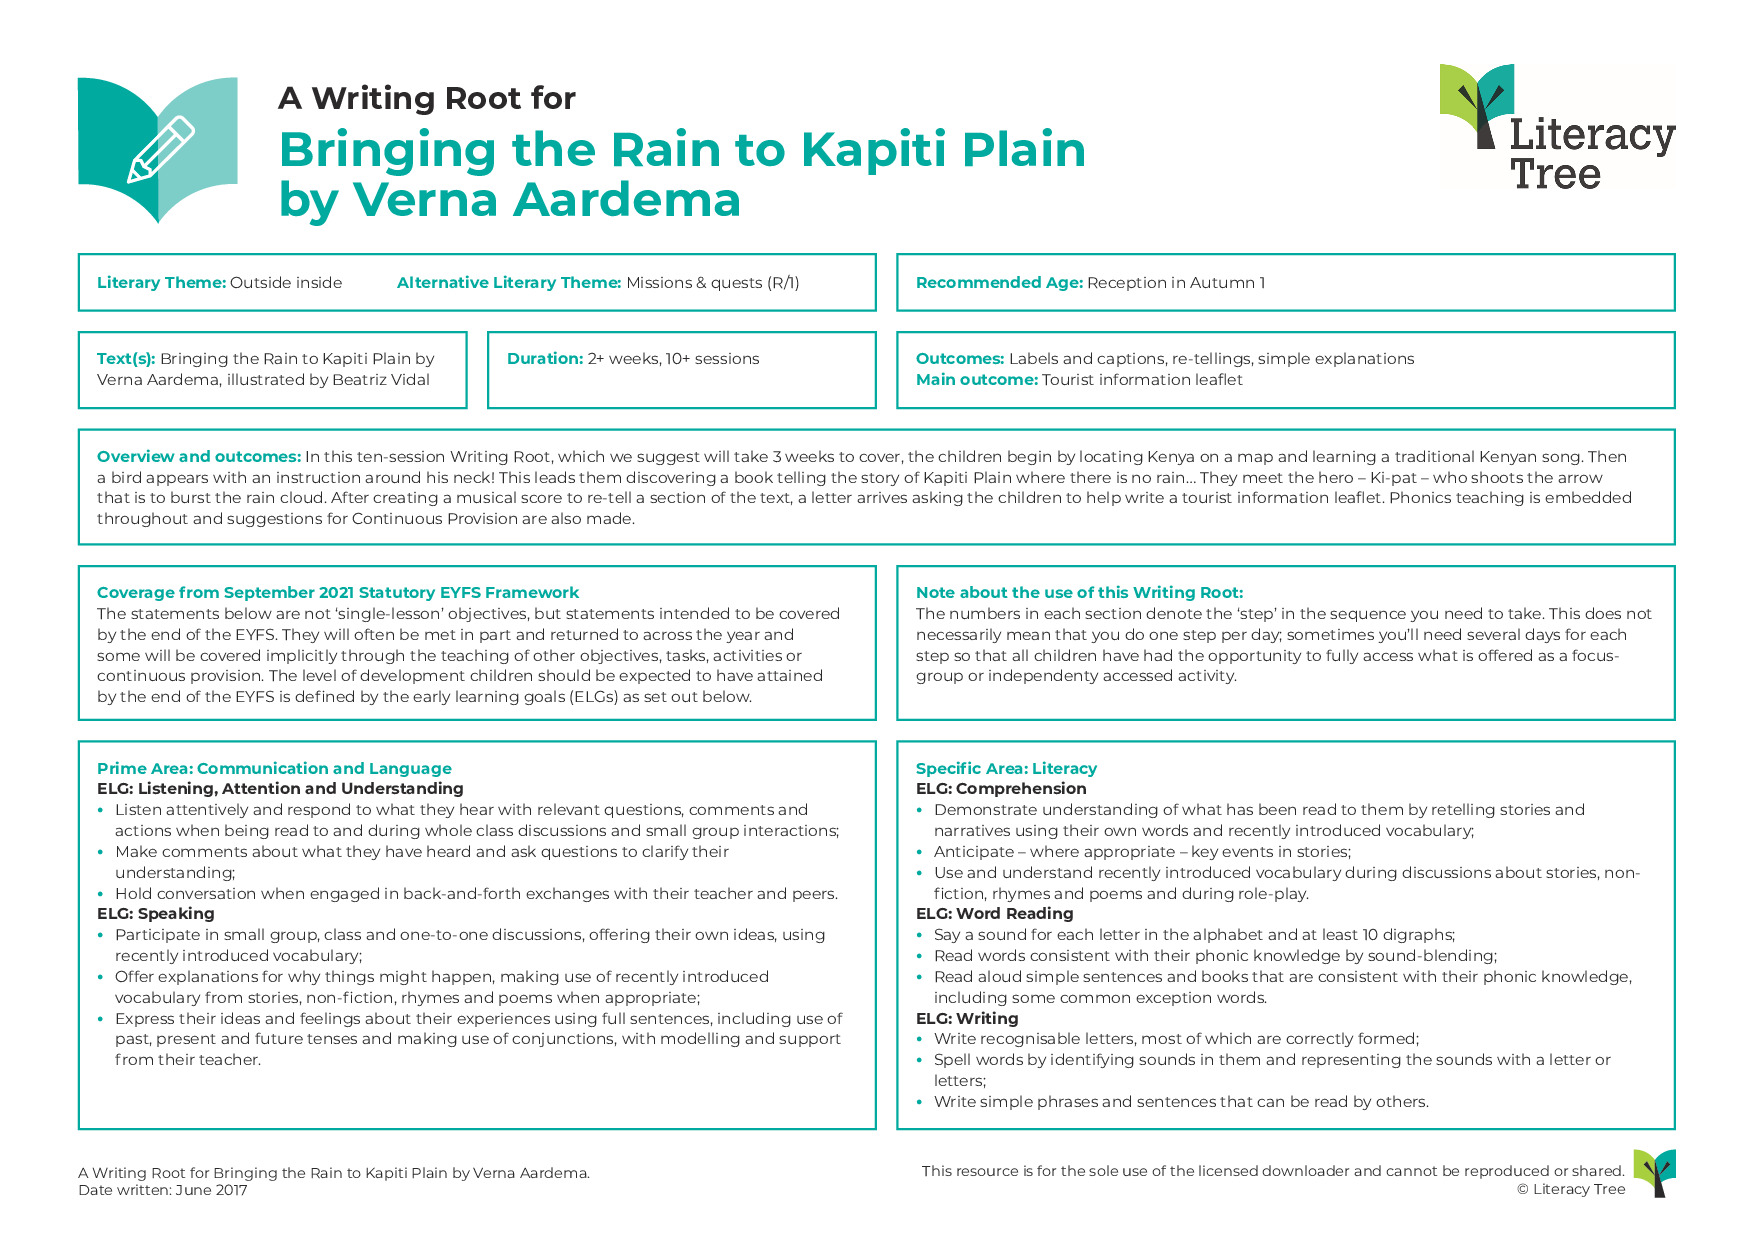 A Writing Root for Bringing the Rain to Kapiti Plain